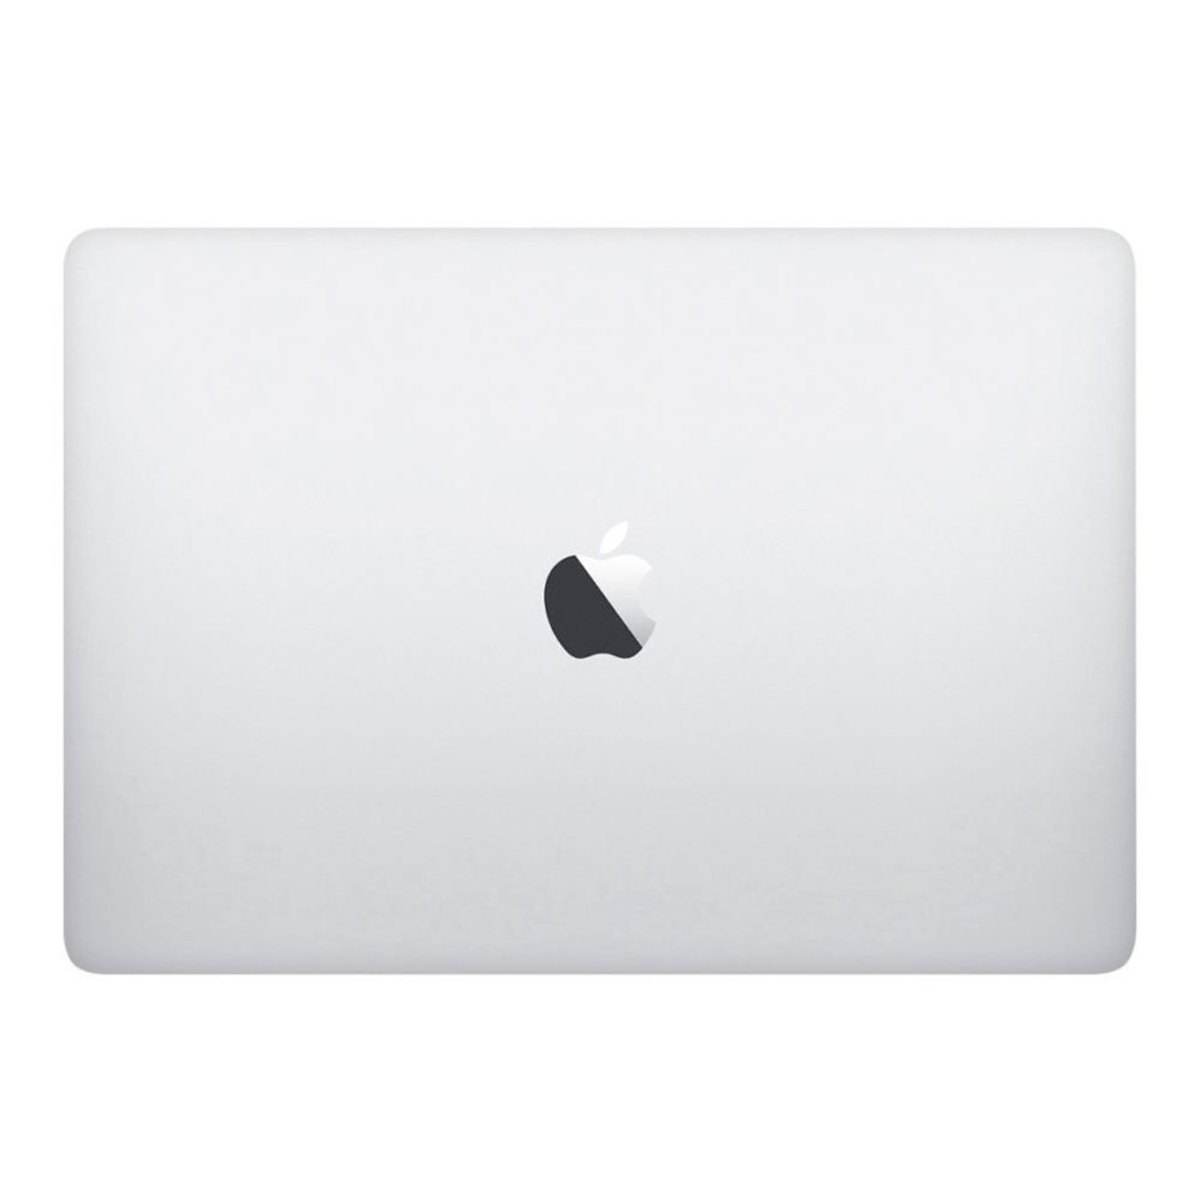 Macbook - Apple Mr9v2ll/a I5 Padrão Apple 2.30ghz 8gb 512gb Ssd Intel Iris Plus Graphics 655 Macos High Sierra 13,3" Polegadas